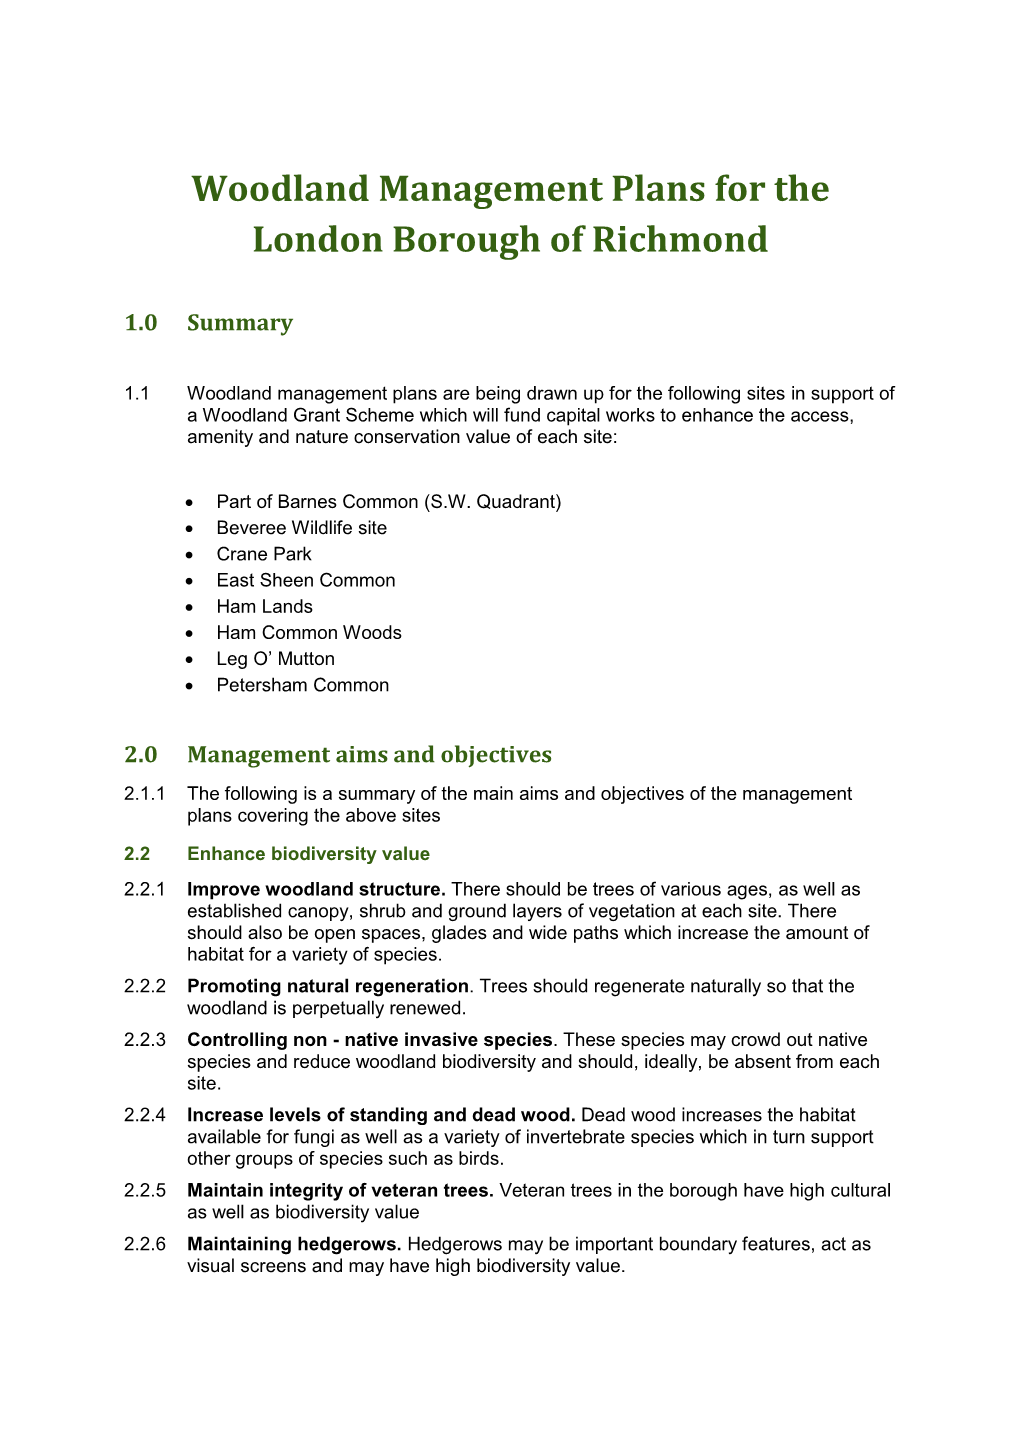 Woodland Management Plans for the London Borough of Richmond